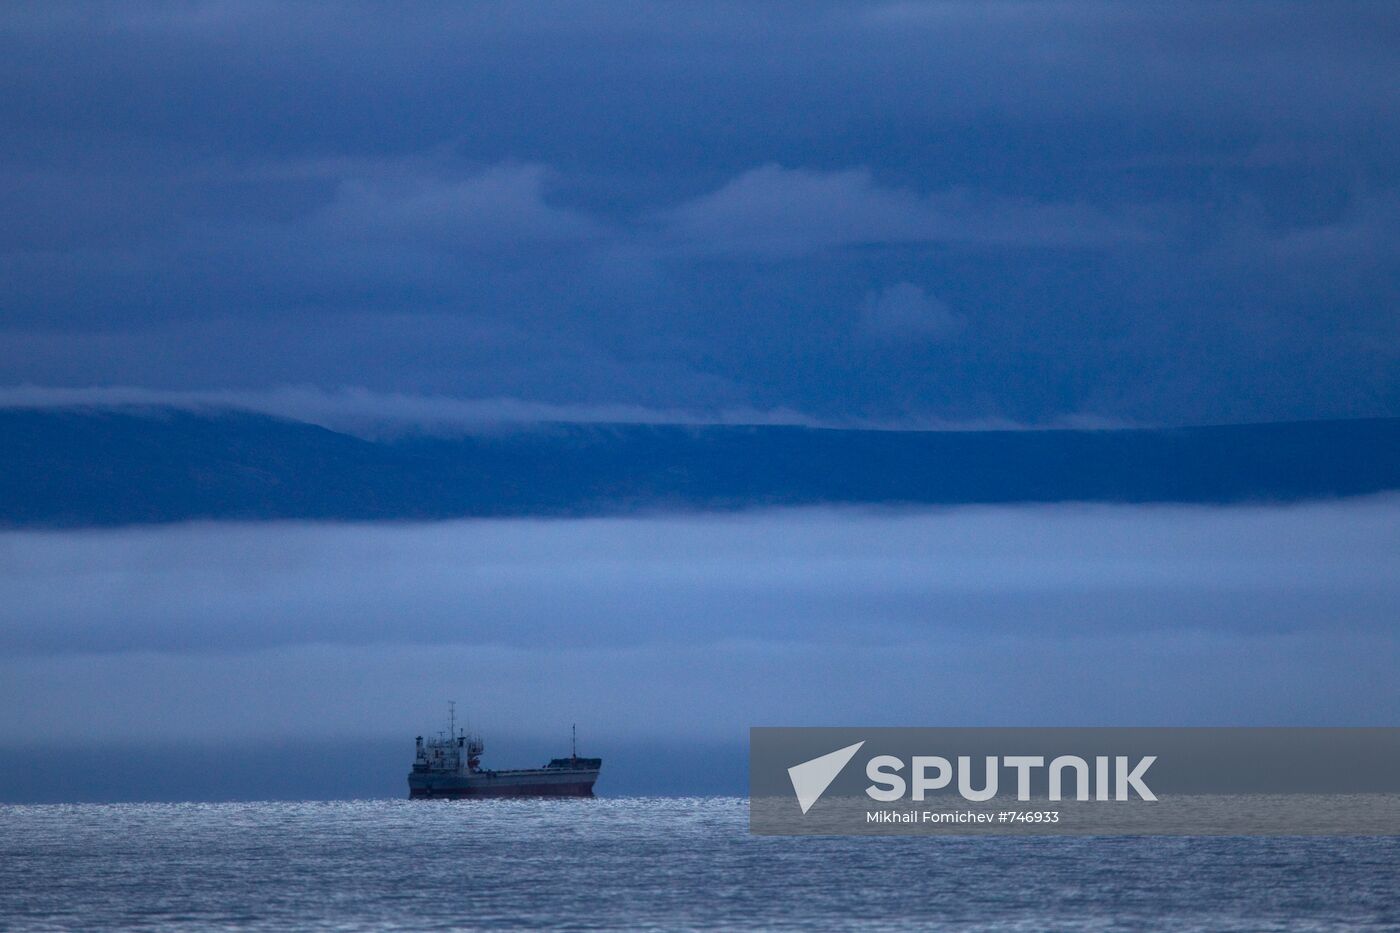 A ship in the East Siberian Sea